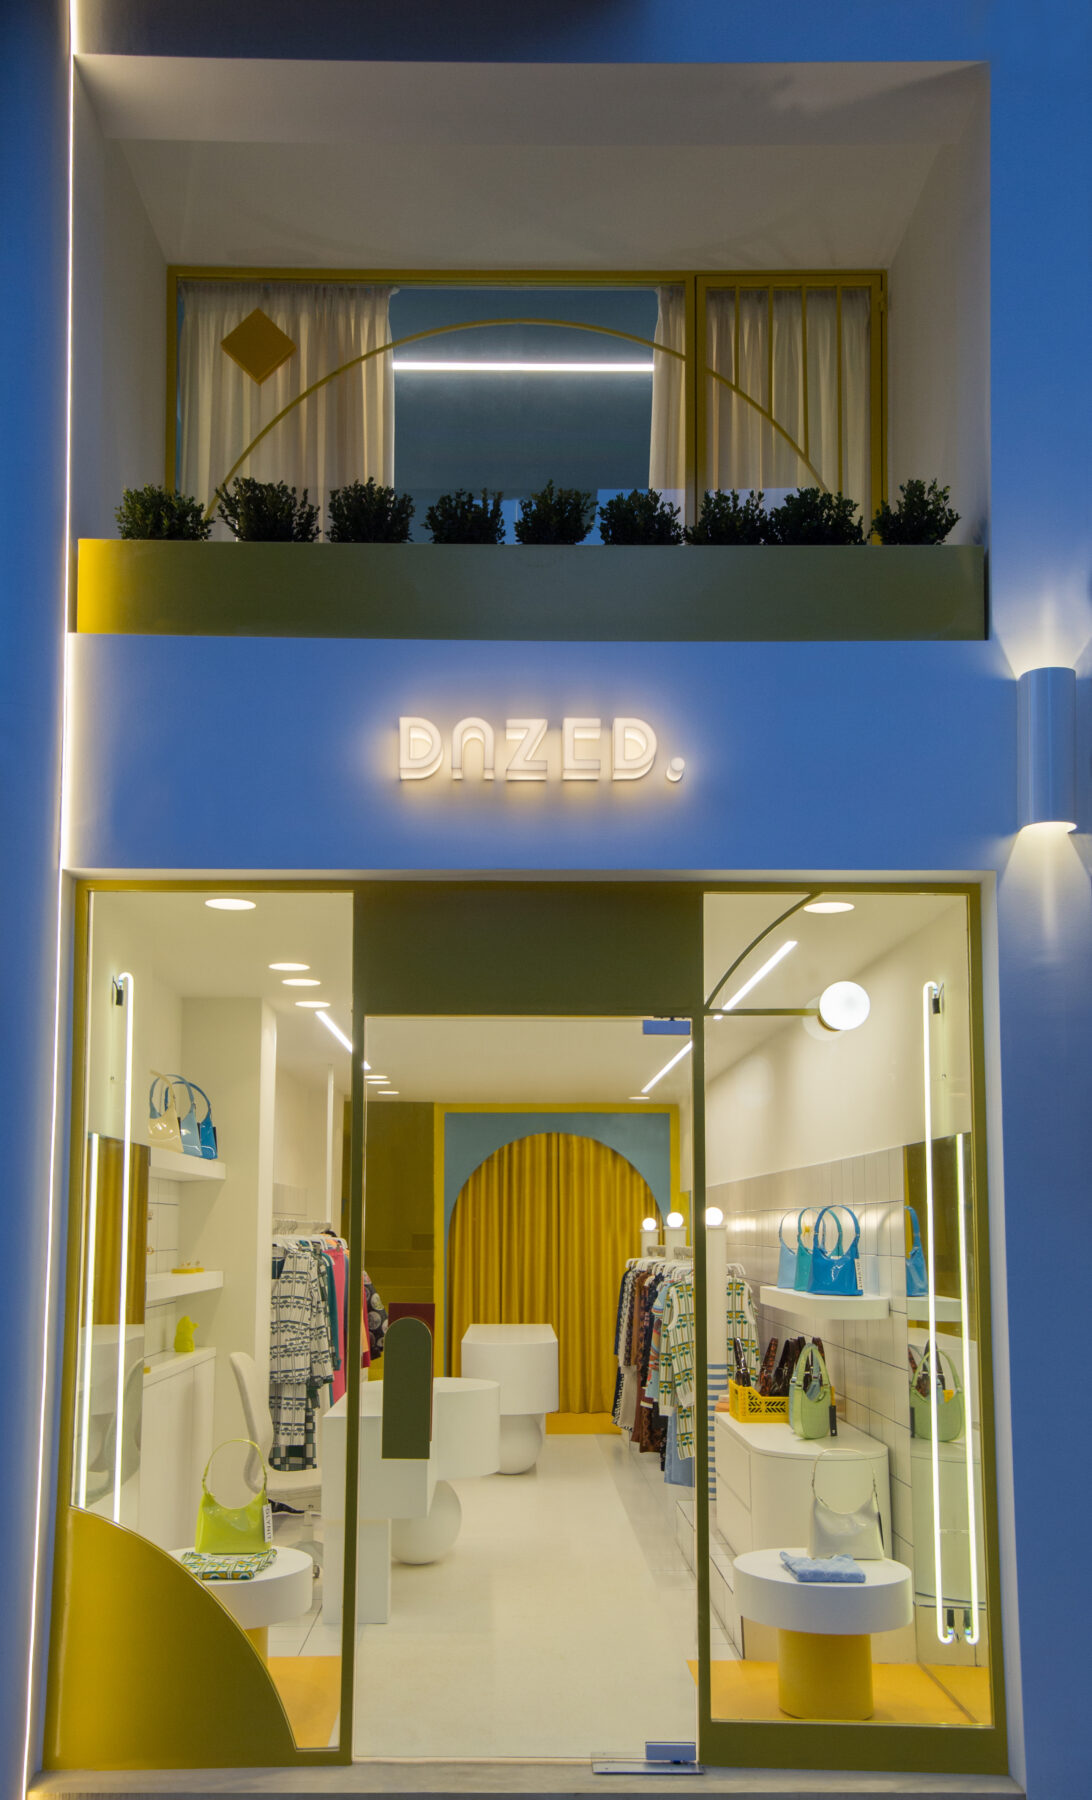 Archisearch Dazed boutique designed by pluslines studio in Trikala, Greece.